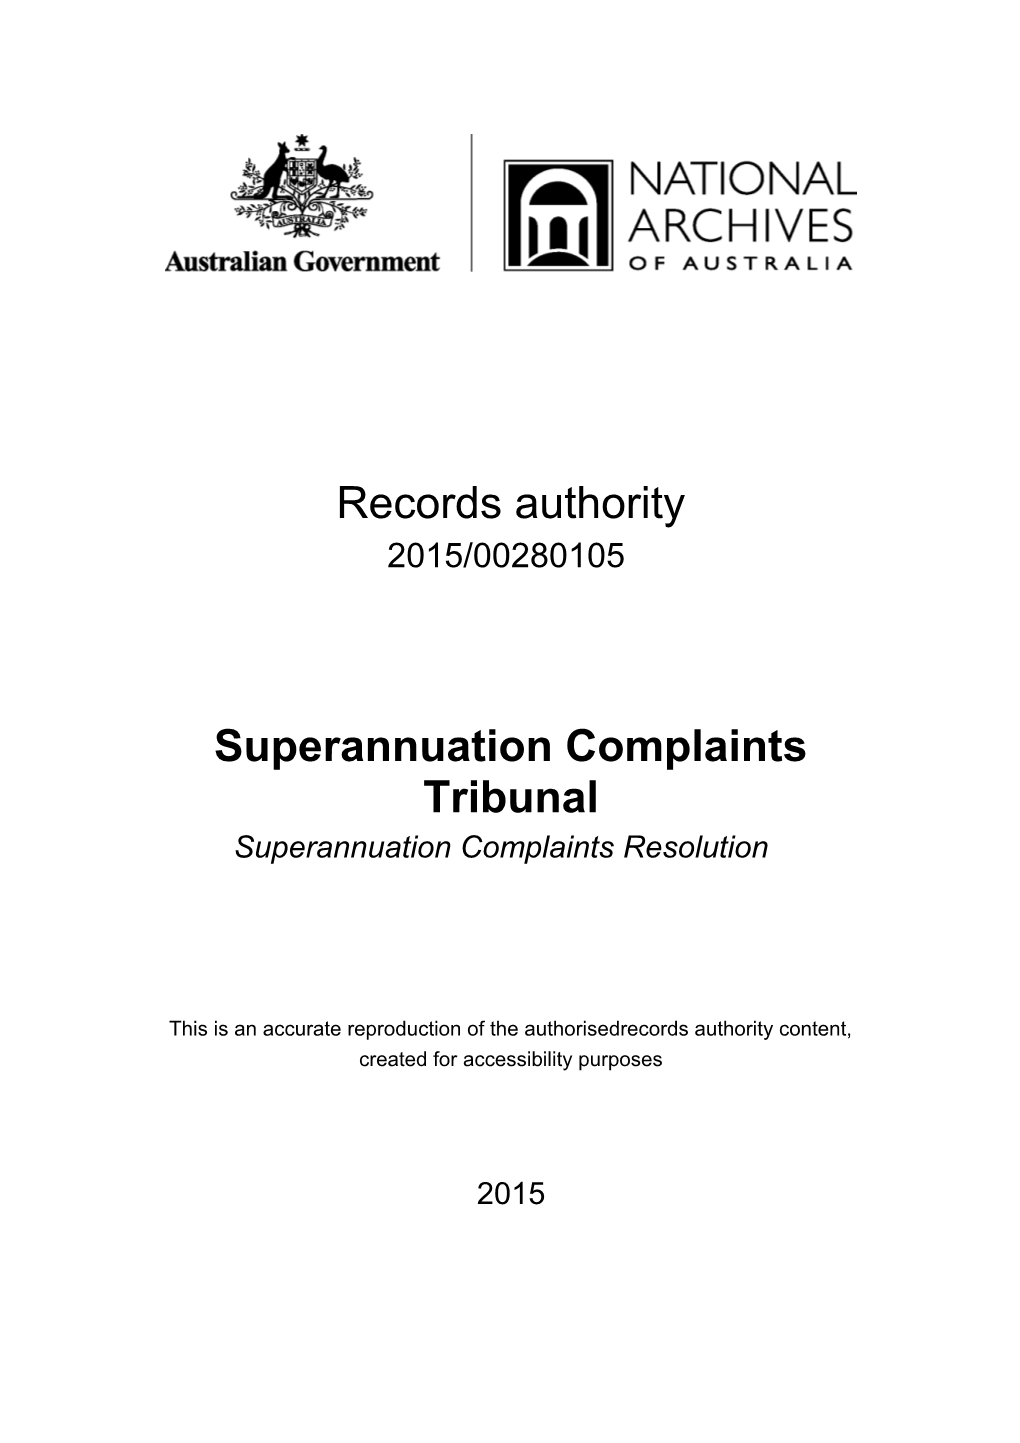 Superannuation Complaints Tribunal - Record Authority 2015/00280105